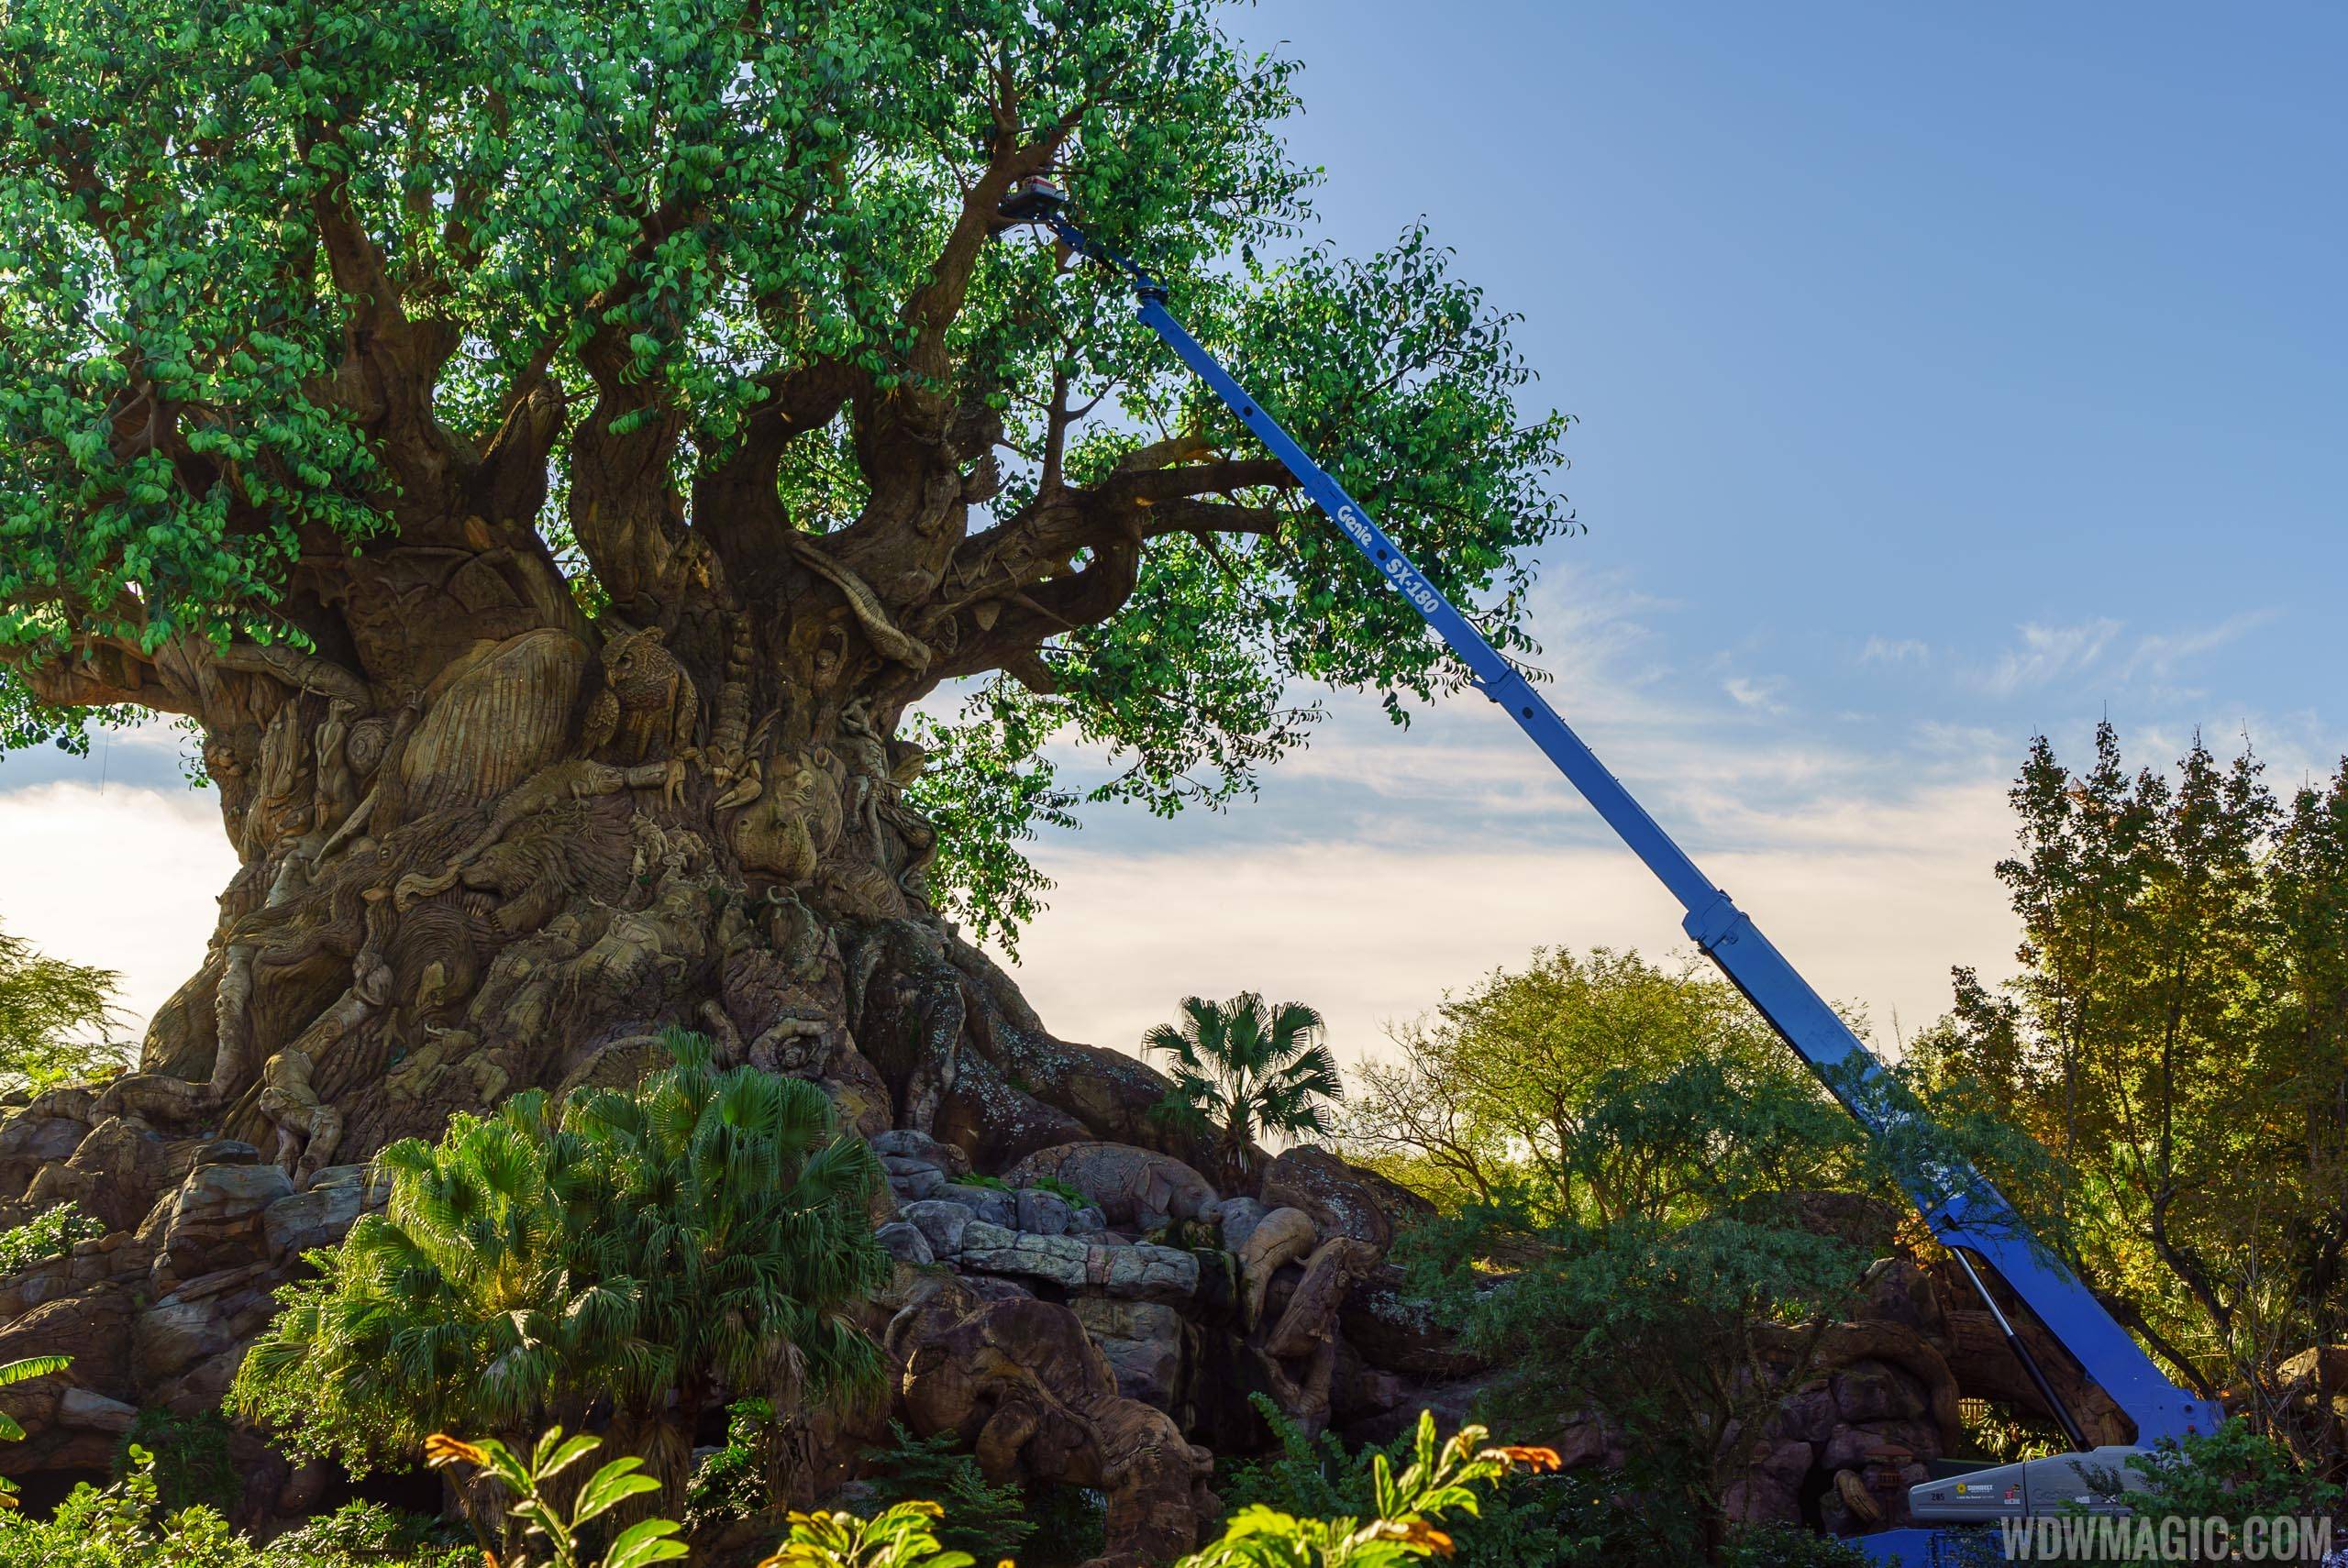 PHOTOS - Crane working on The Tree of Life at Disney's Animal Kingdom